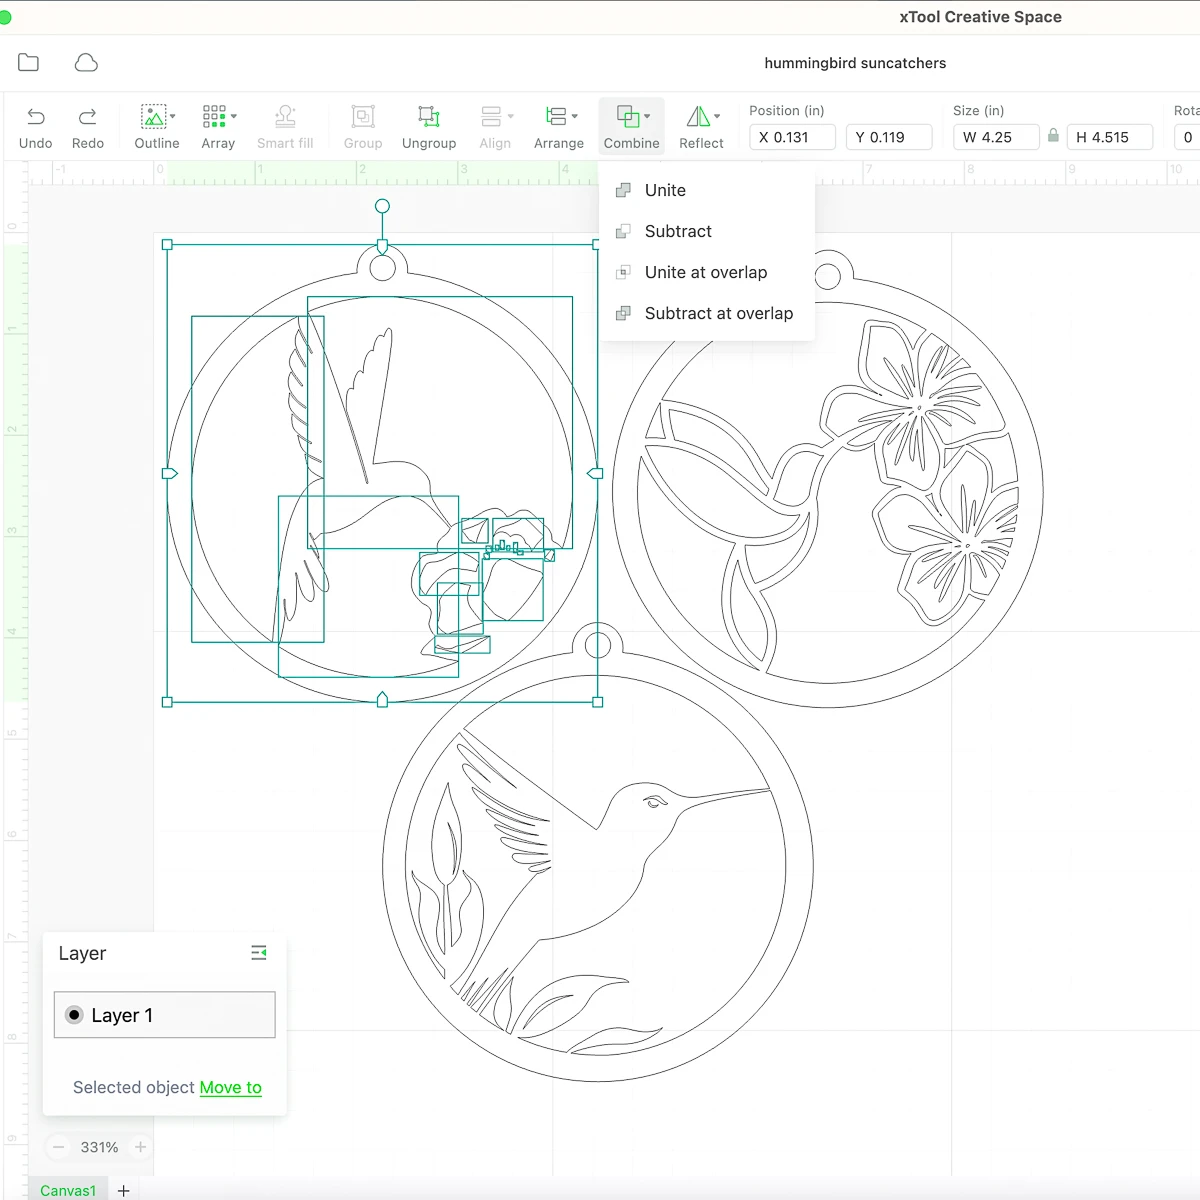 designing hummingbird suncatchers in xTool Creative Space